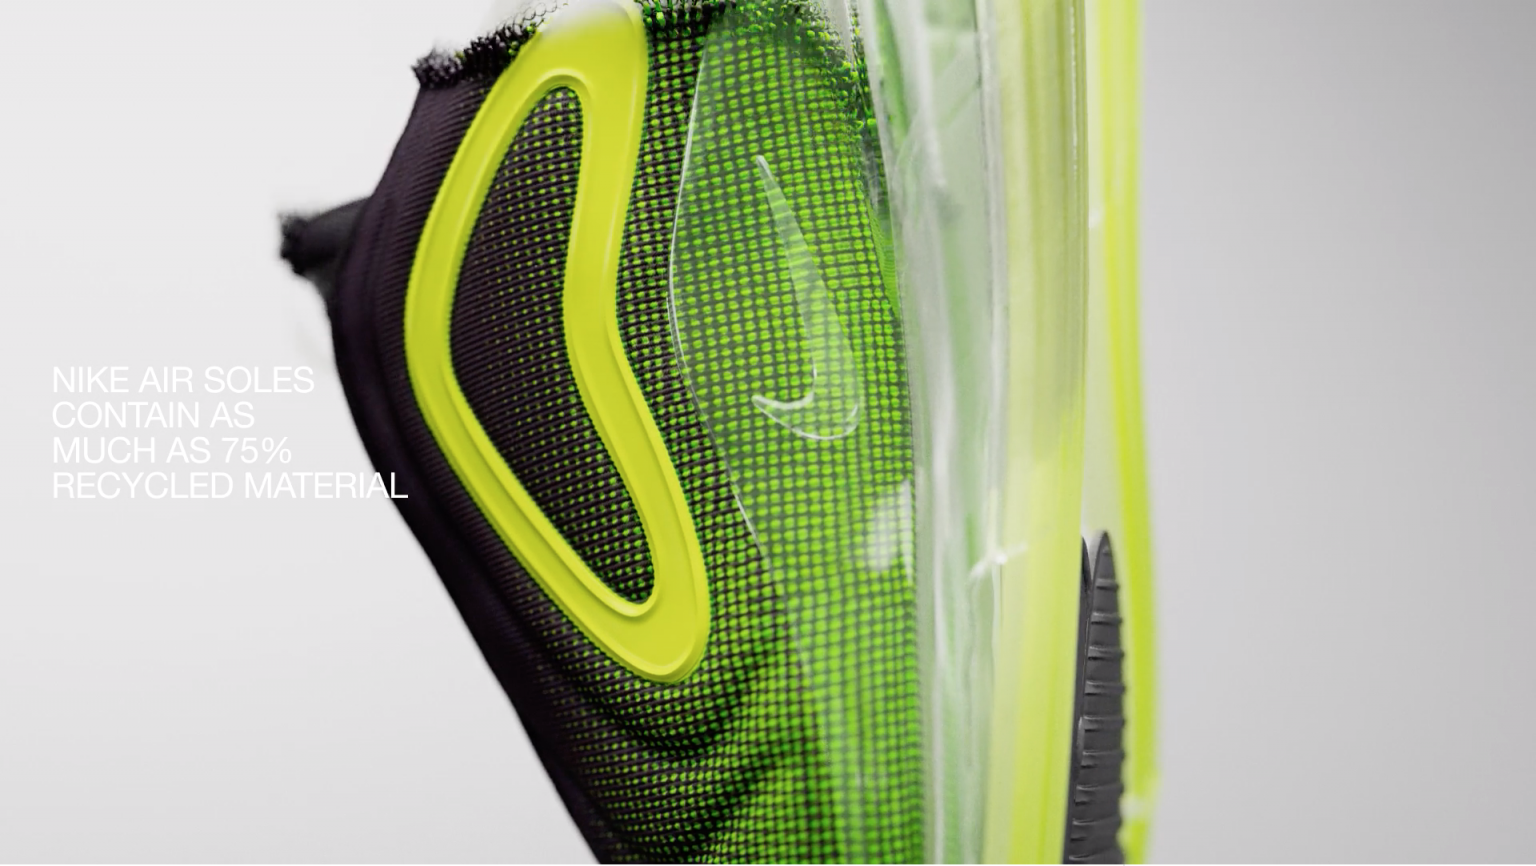 KORB Helps Nike Move To Zero | STASH MAGAZINE : Motion design – STASH